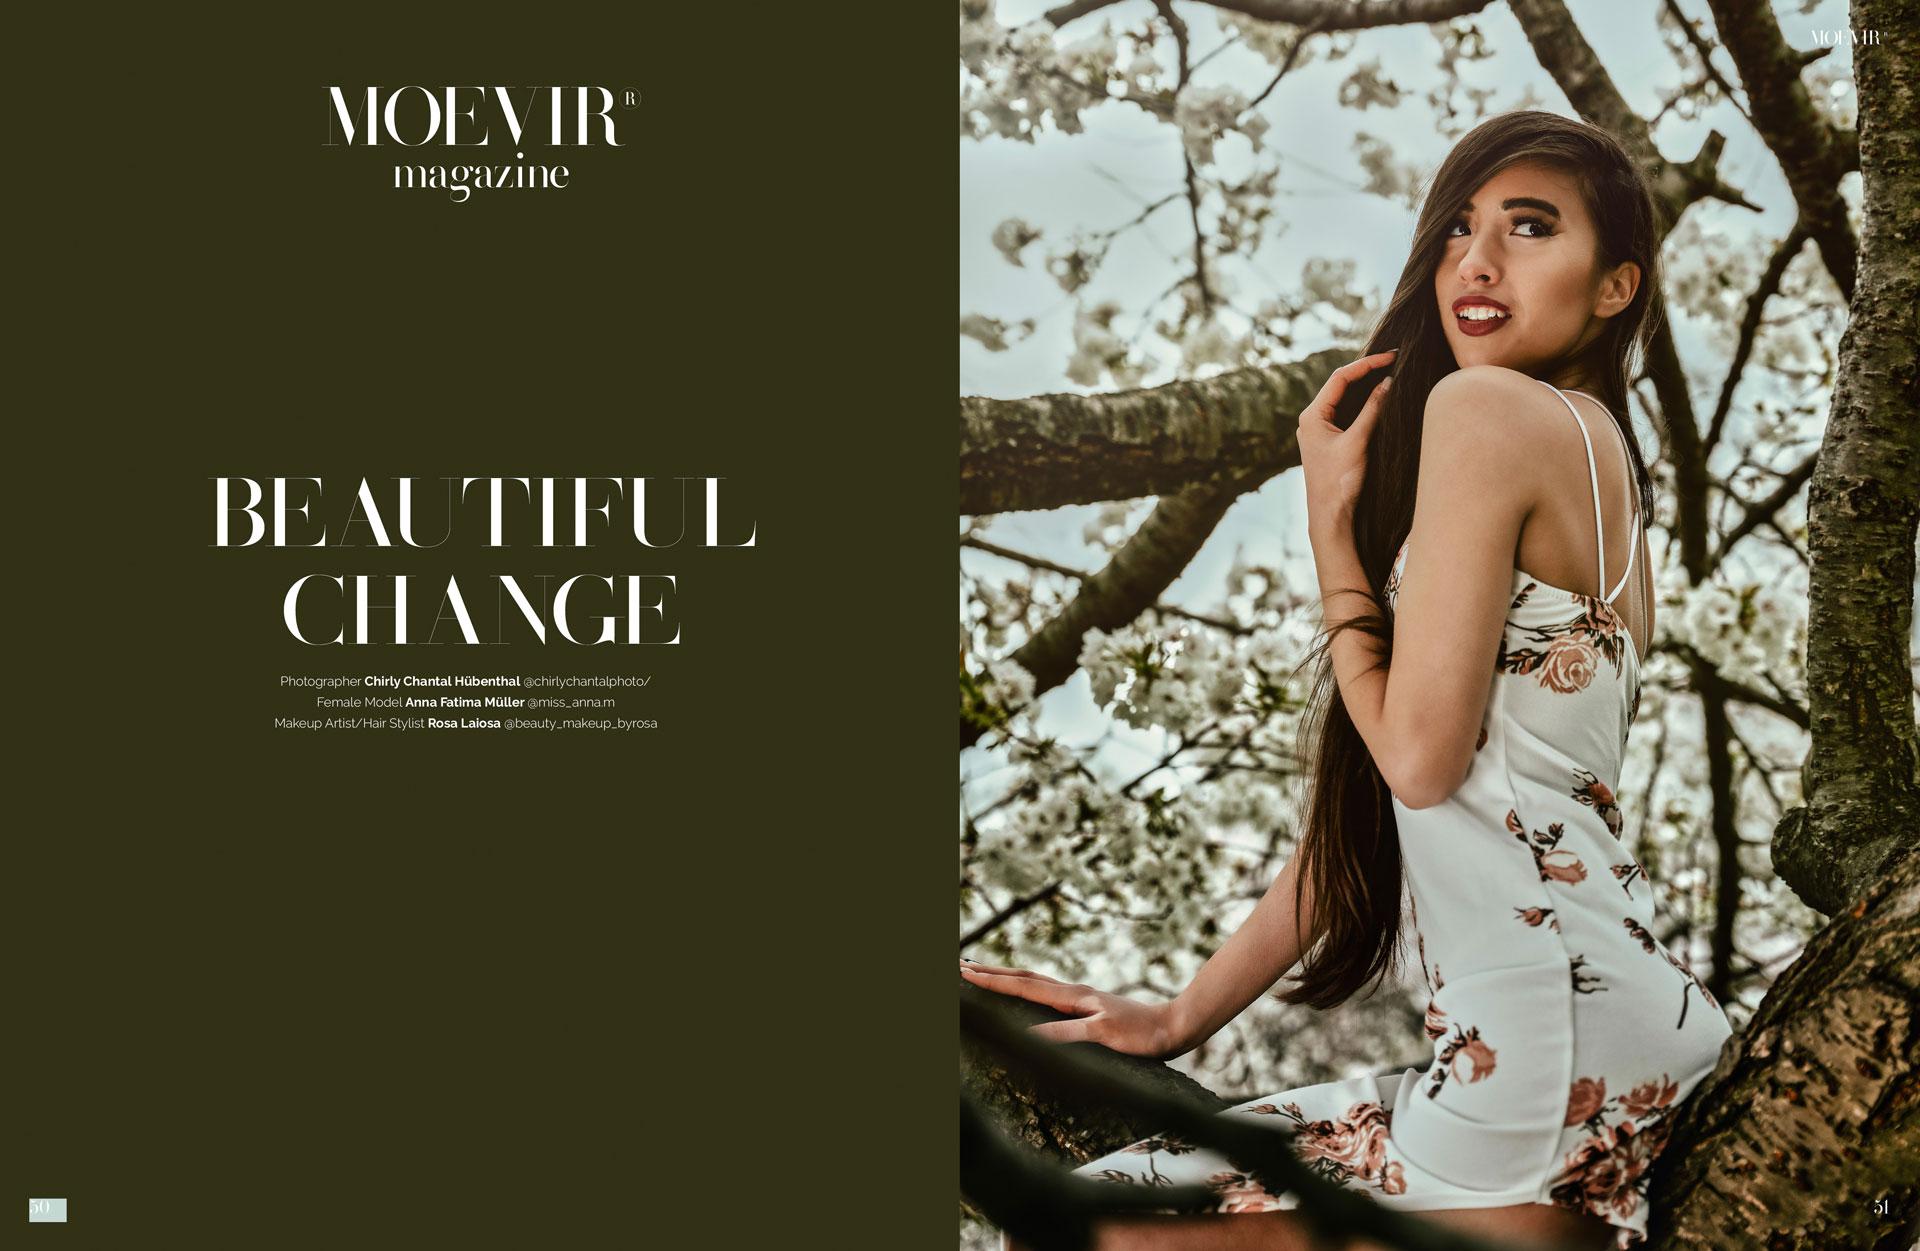 Moevir Magazine Beautiful Change